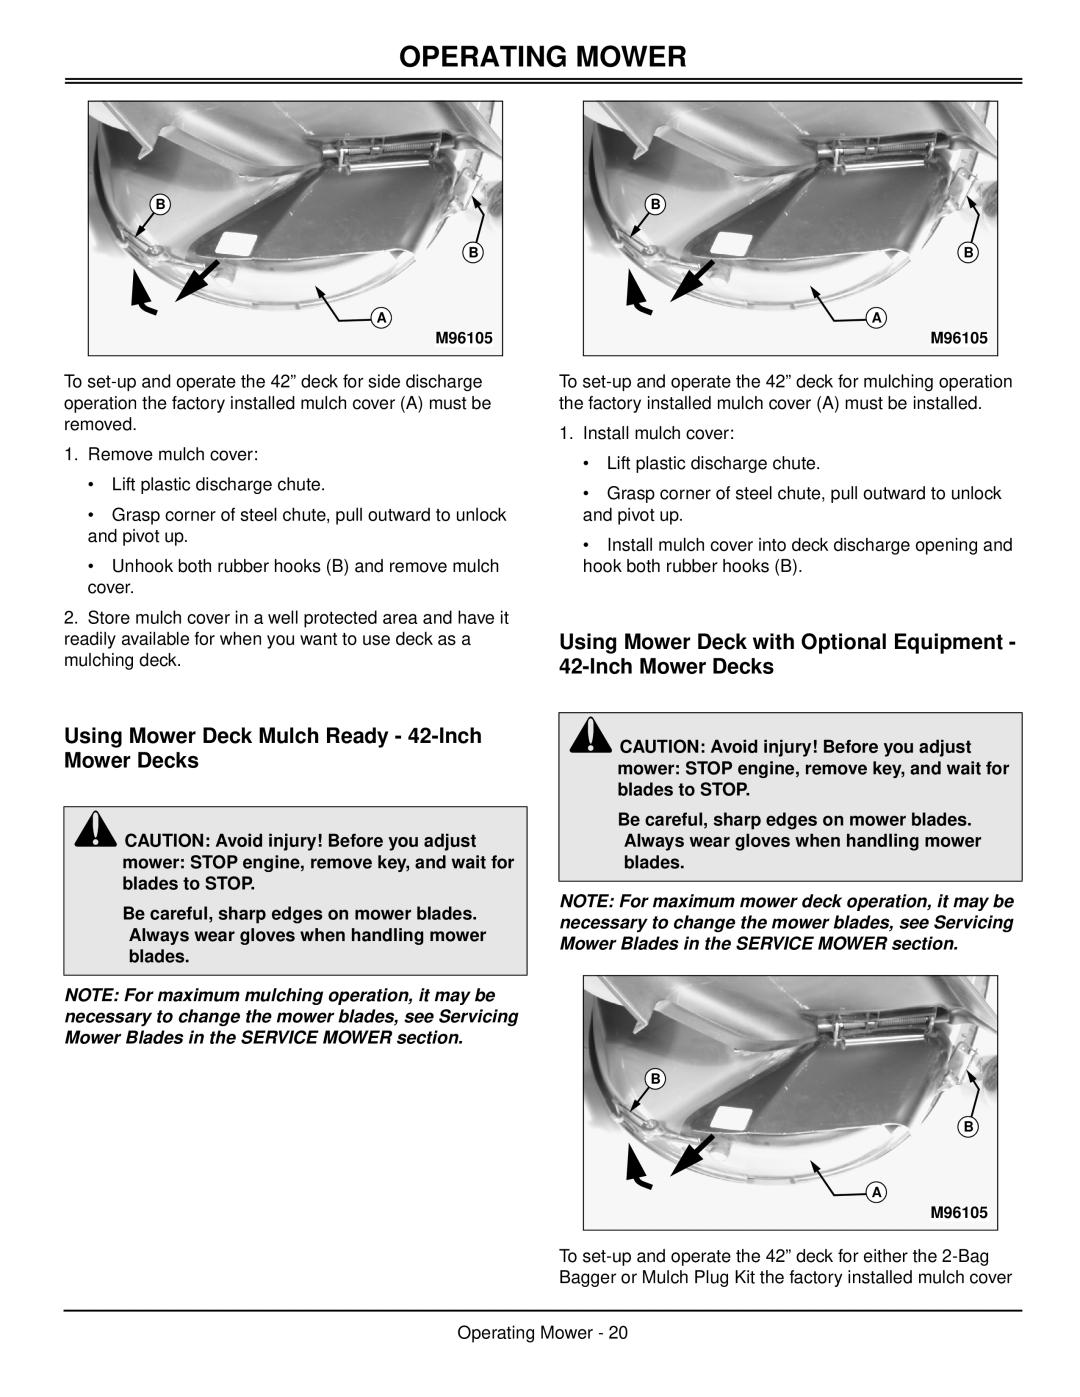 Scotts S1642, S1742, S2046 manual Using Mower Deck Mulch Ready - 42-Inch Mower Decks, Operating Mower 